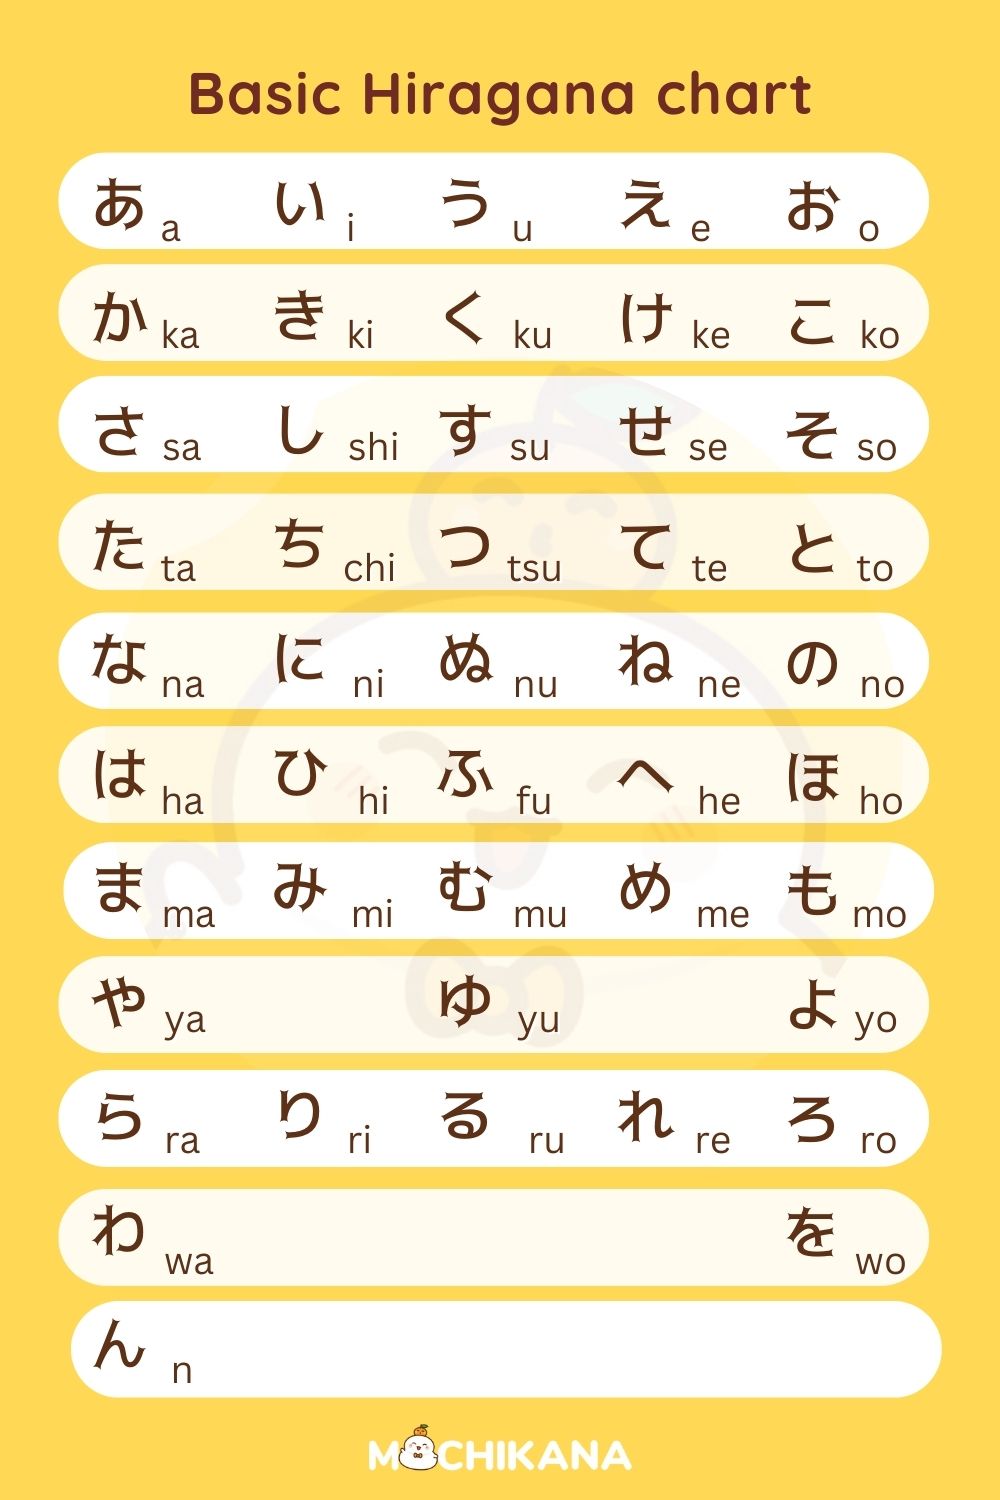 Hiragana alphabet with extra parts